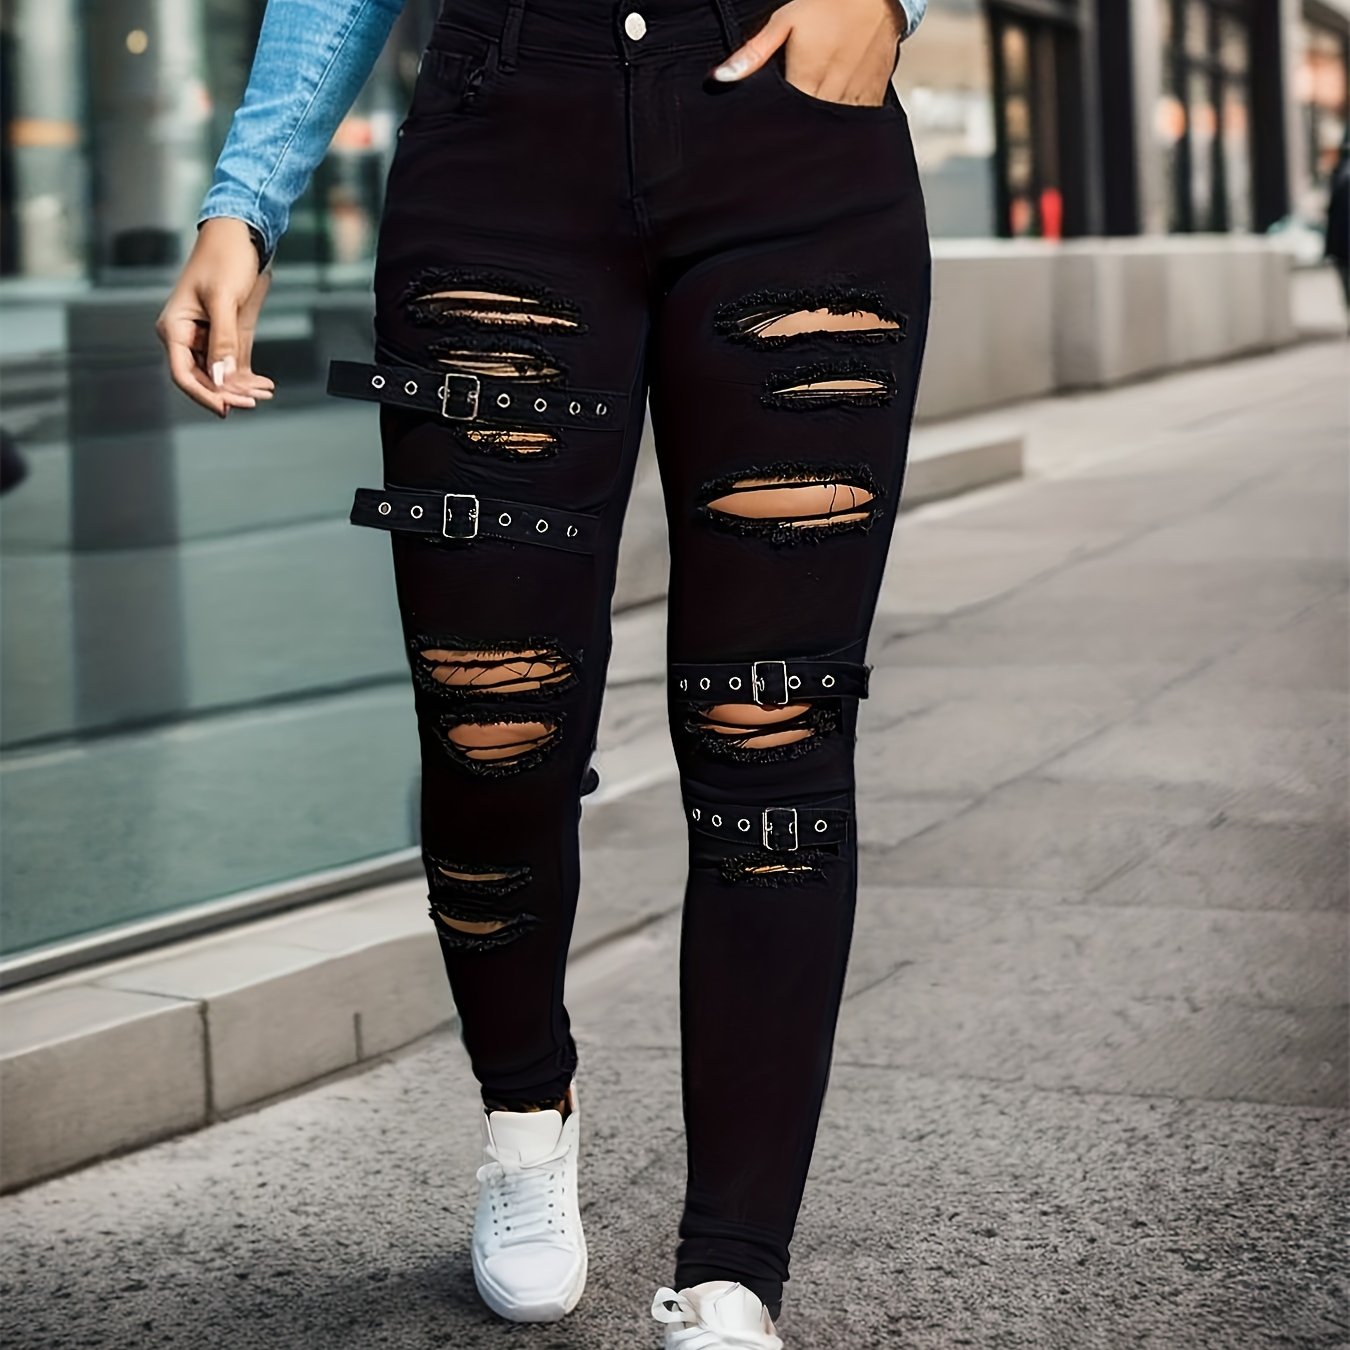 Ripped Grommet Buckle Detail Skinny Jeans, Solid Black High Strech Eye-catching Denim Pants, Women's Denim Jeans & Clothing